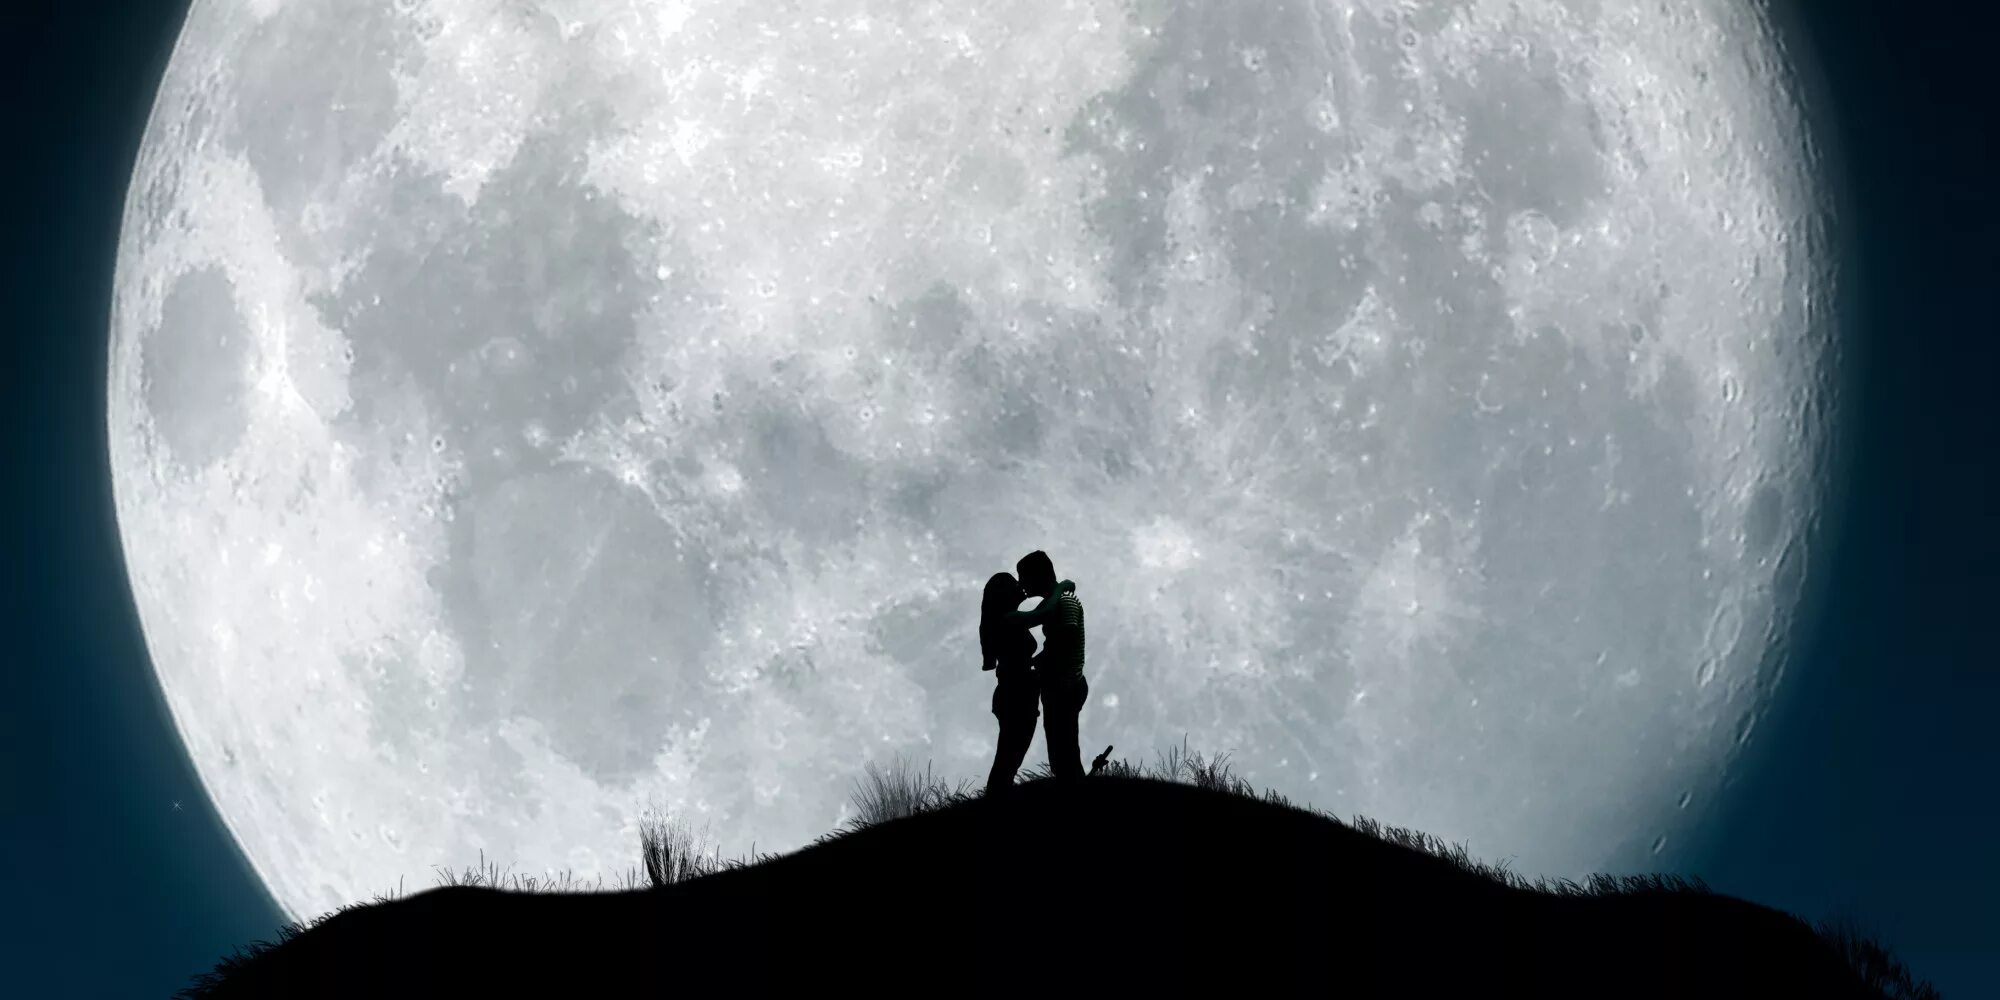 La luna falsa на русском. Ҳамрауи Лунес. Луна фон. Человек на фоне Луны. Фотосессия на фоне Луны.